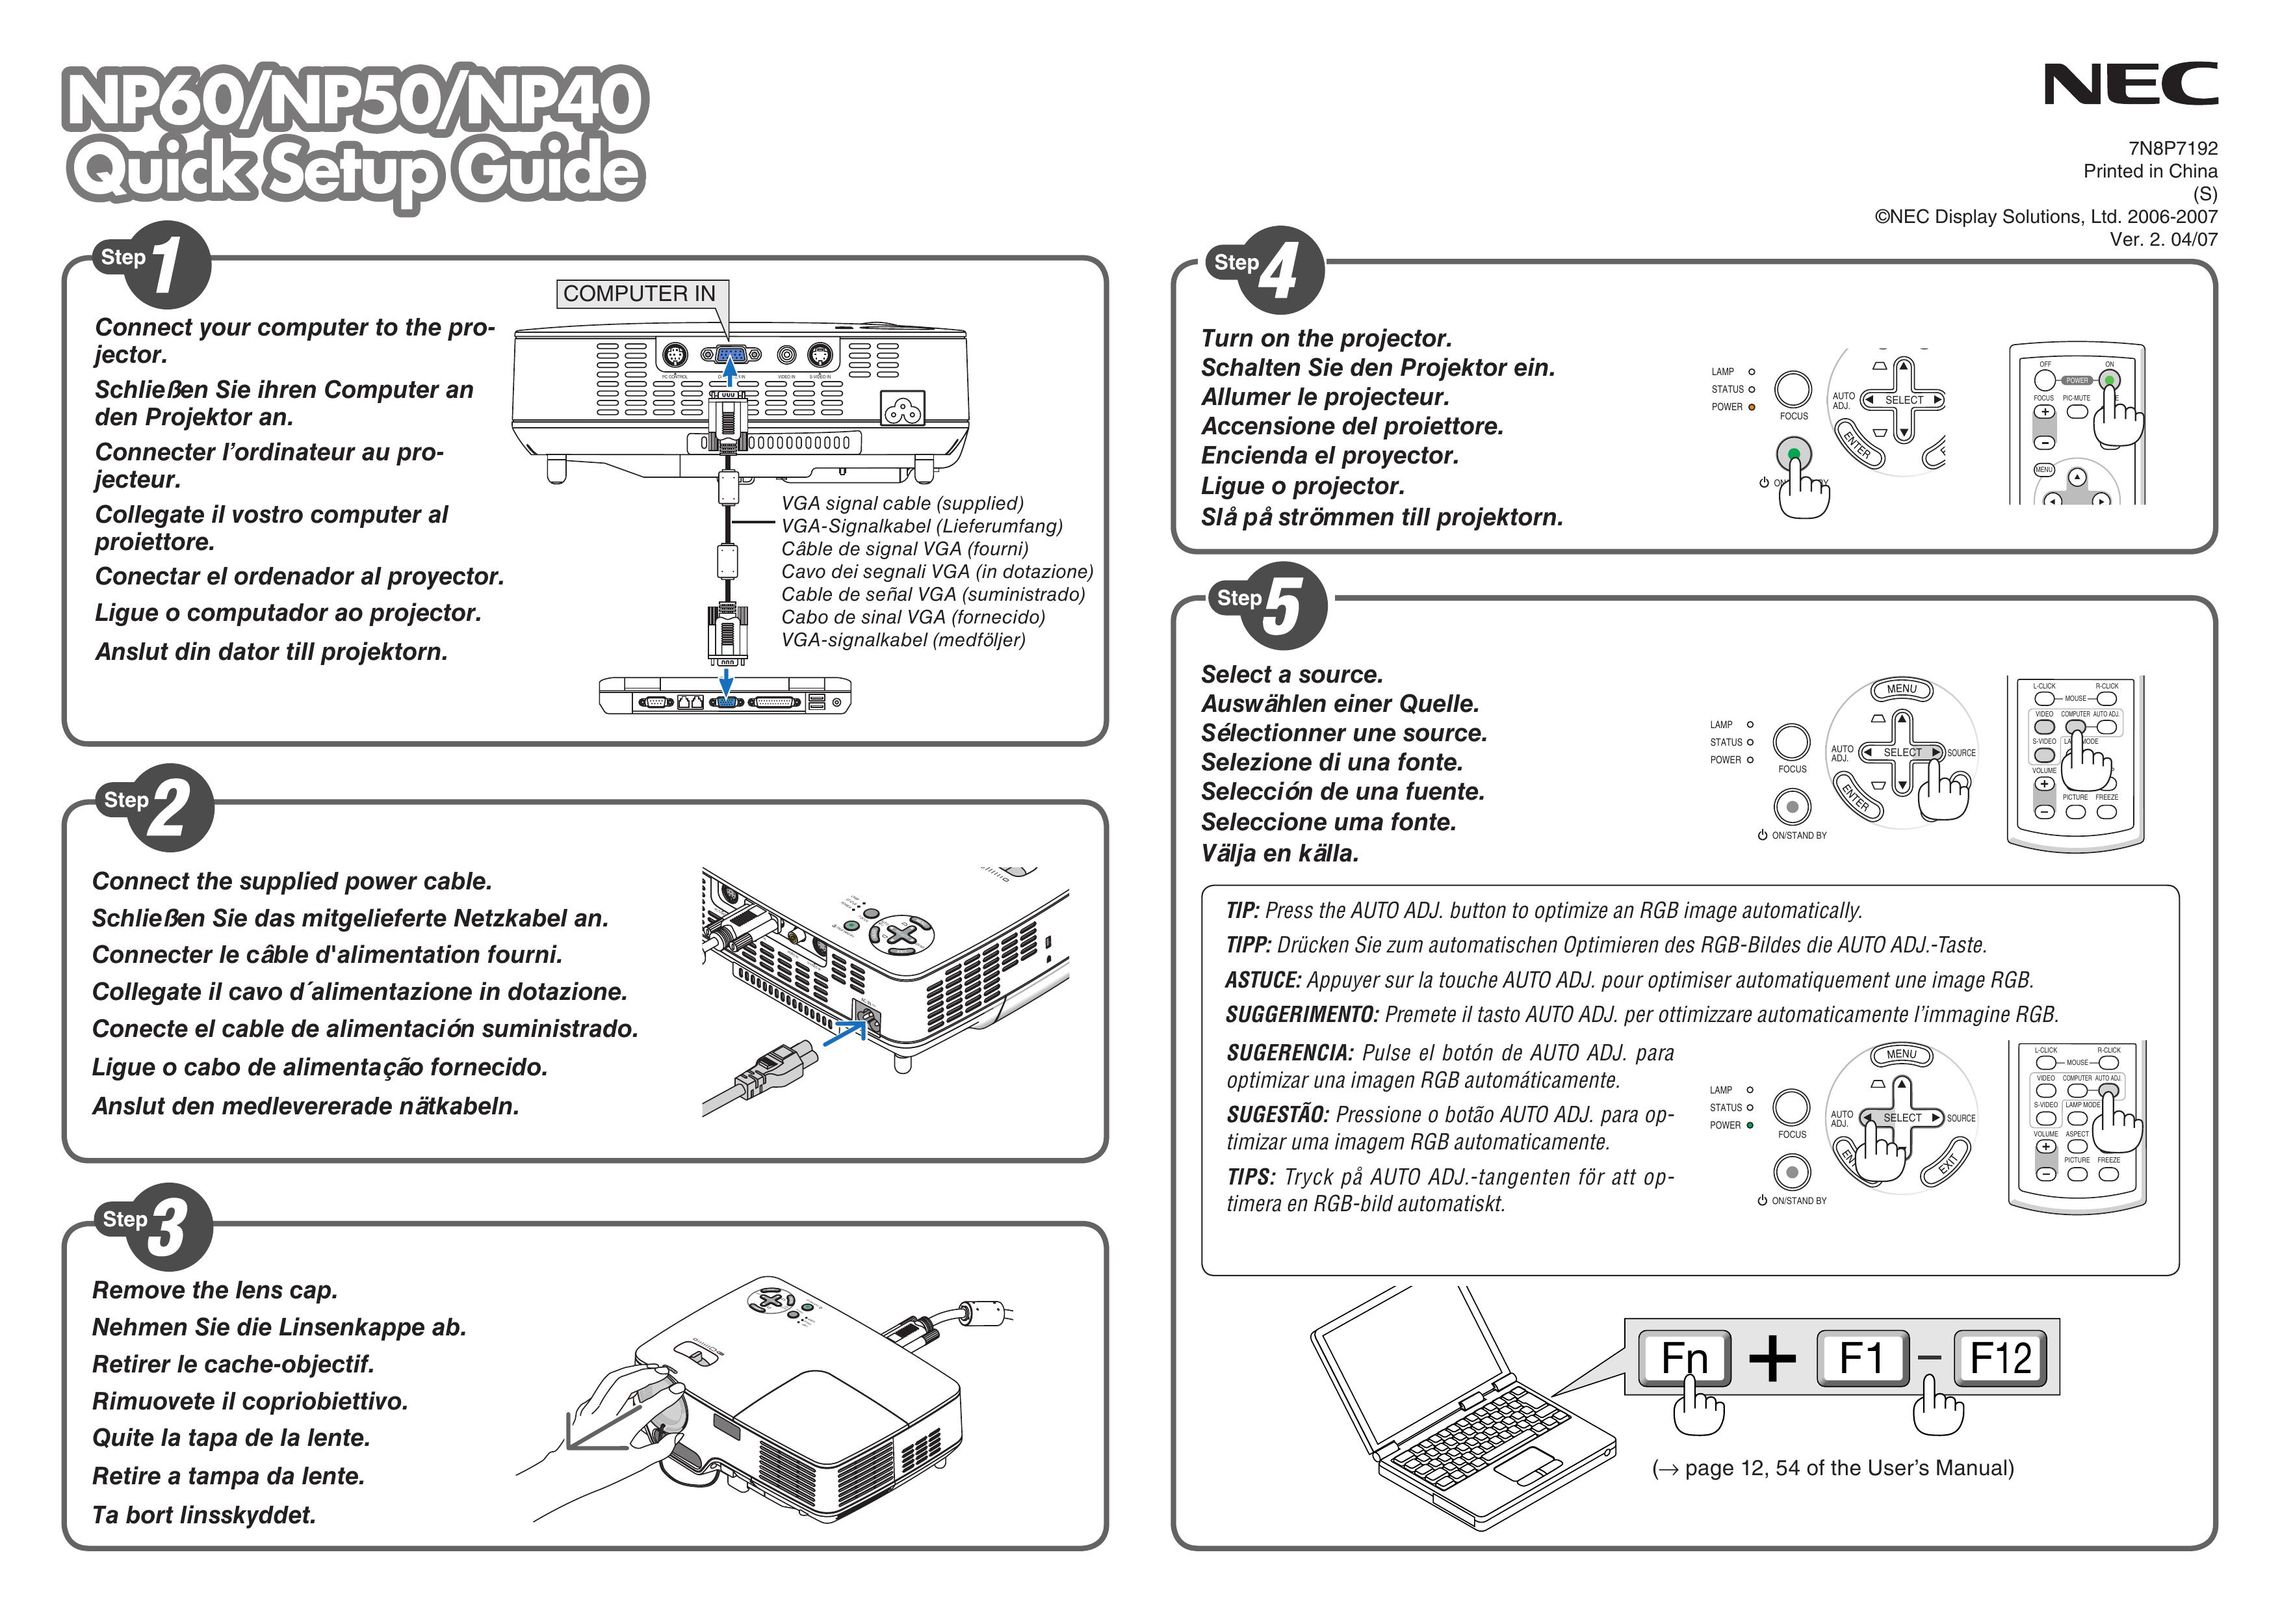 Nikon NP40 Projector User Manual